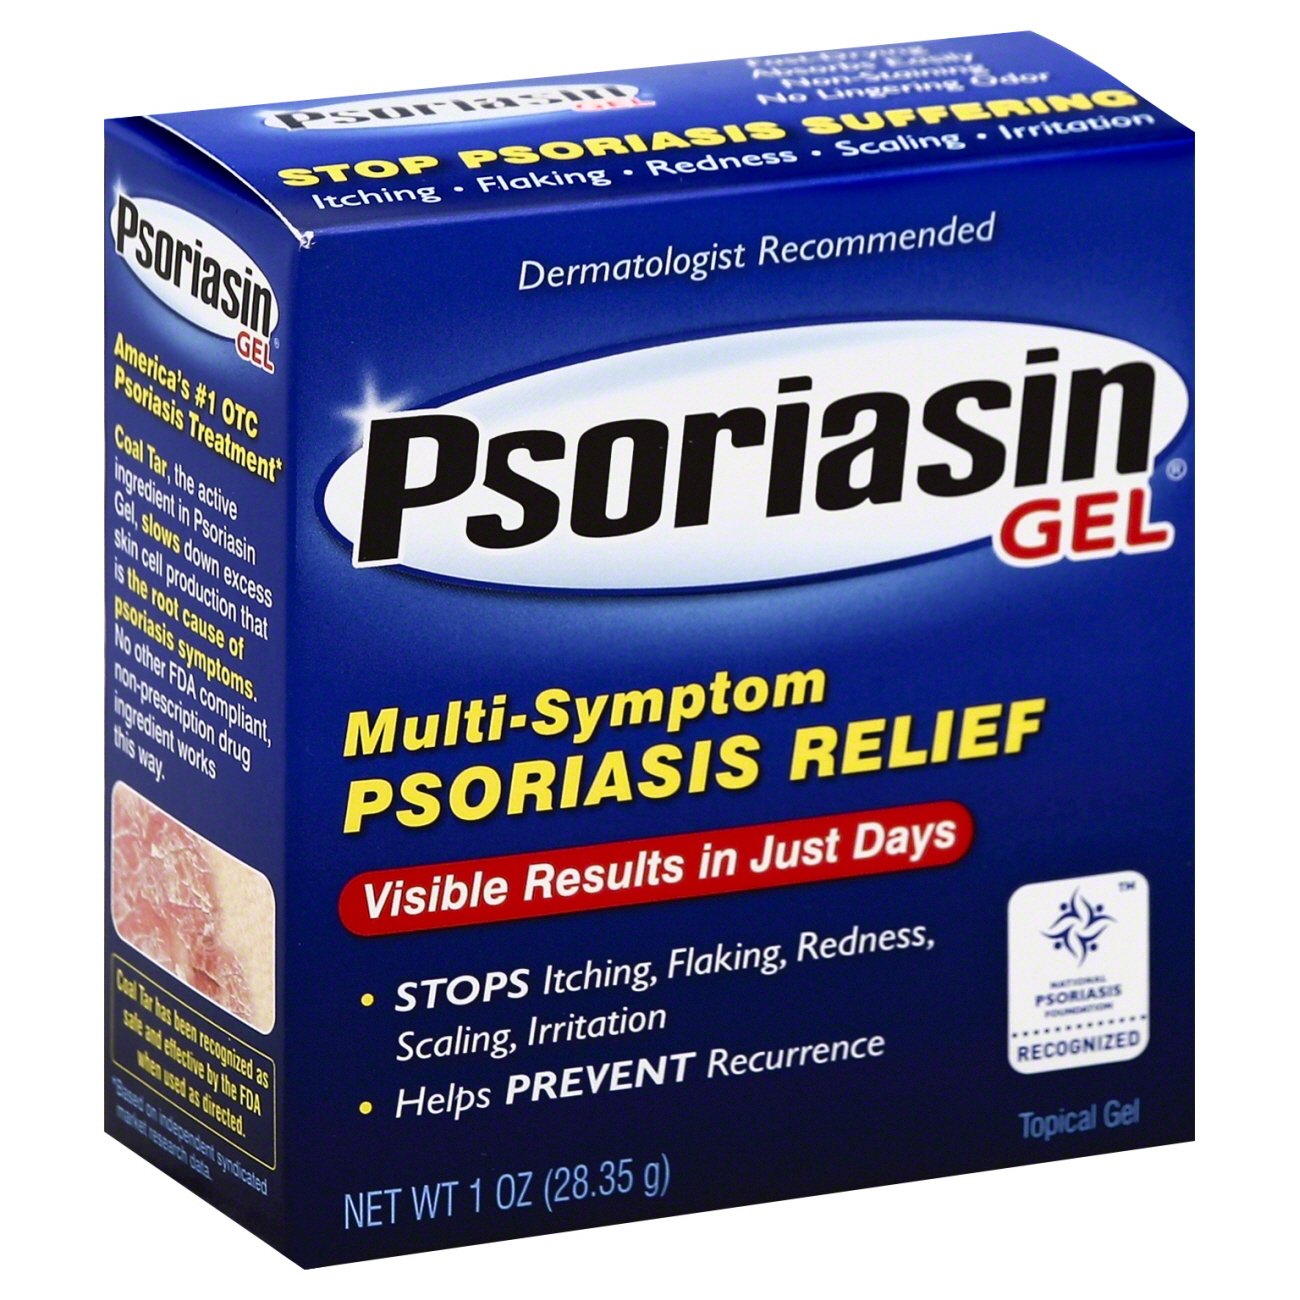 stop psoriasis gel